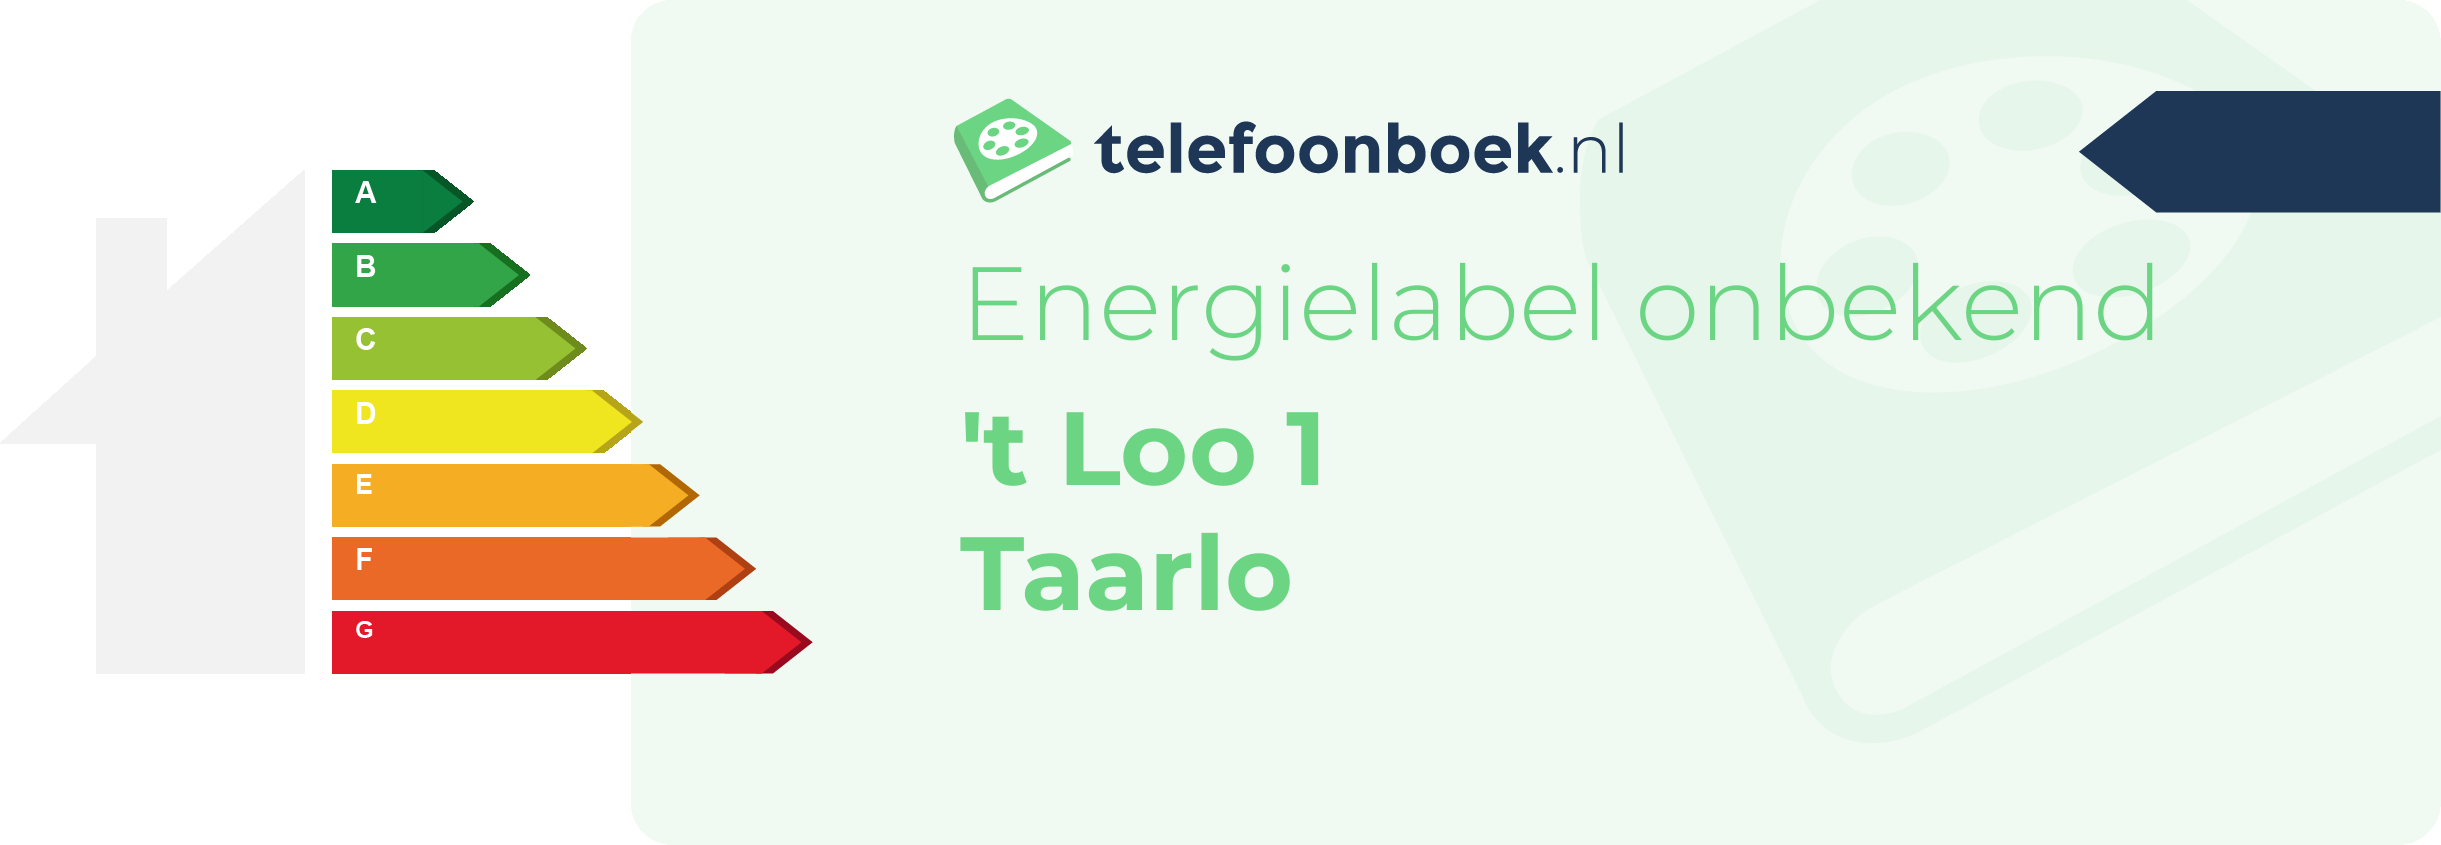 Energielabel 't Loo 1 Taarlo